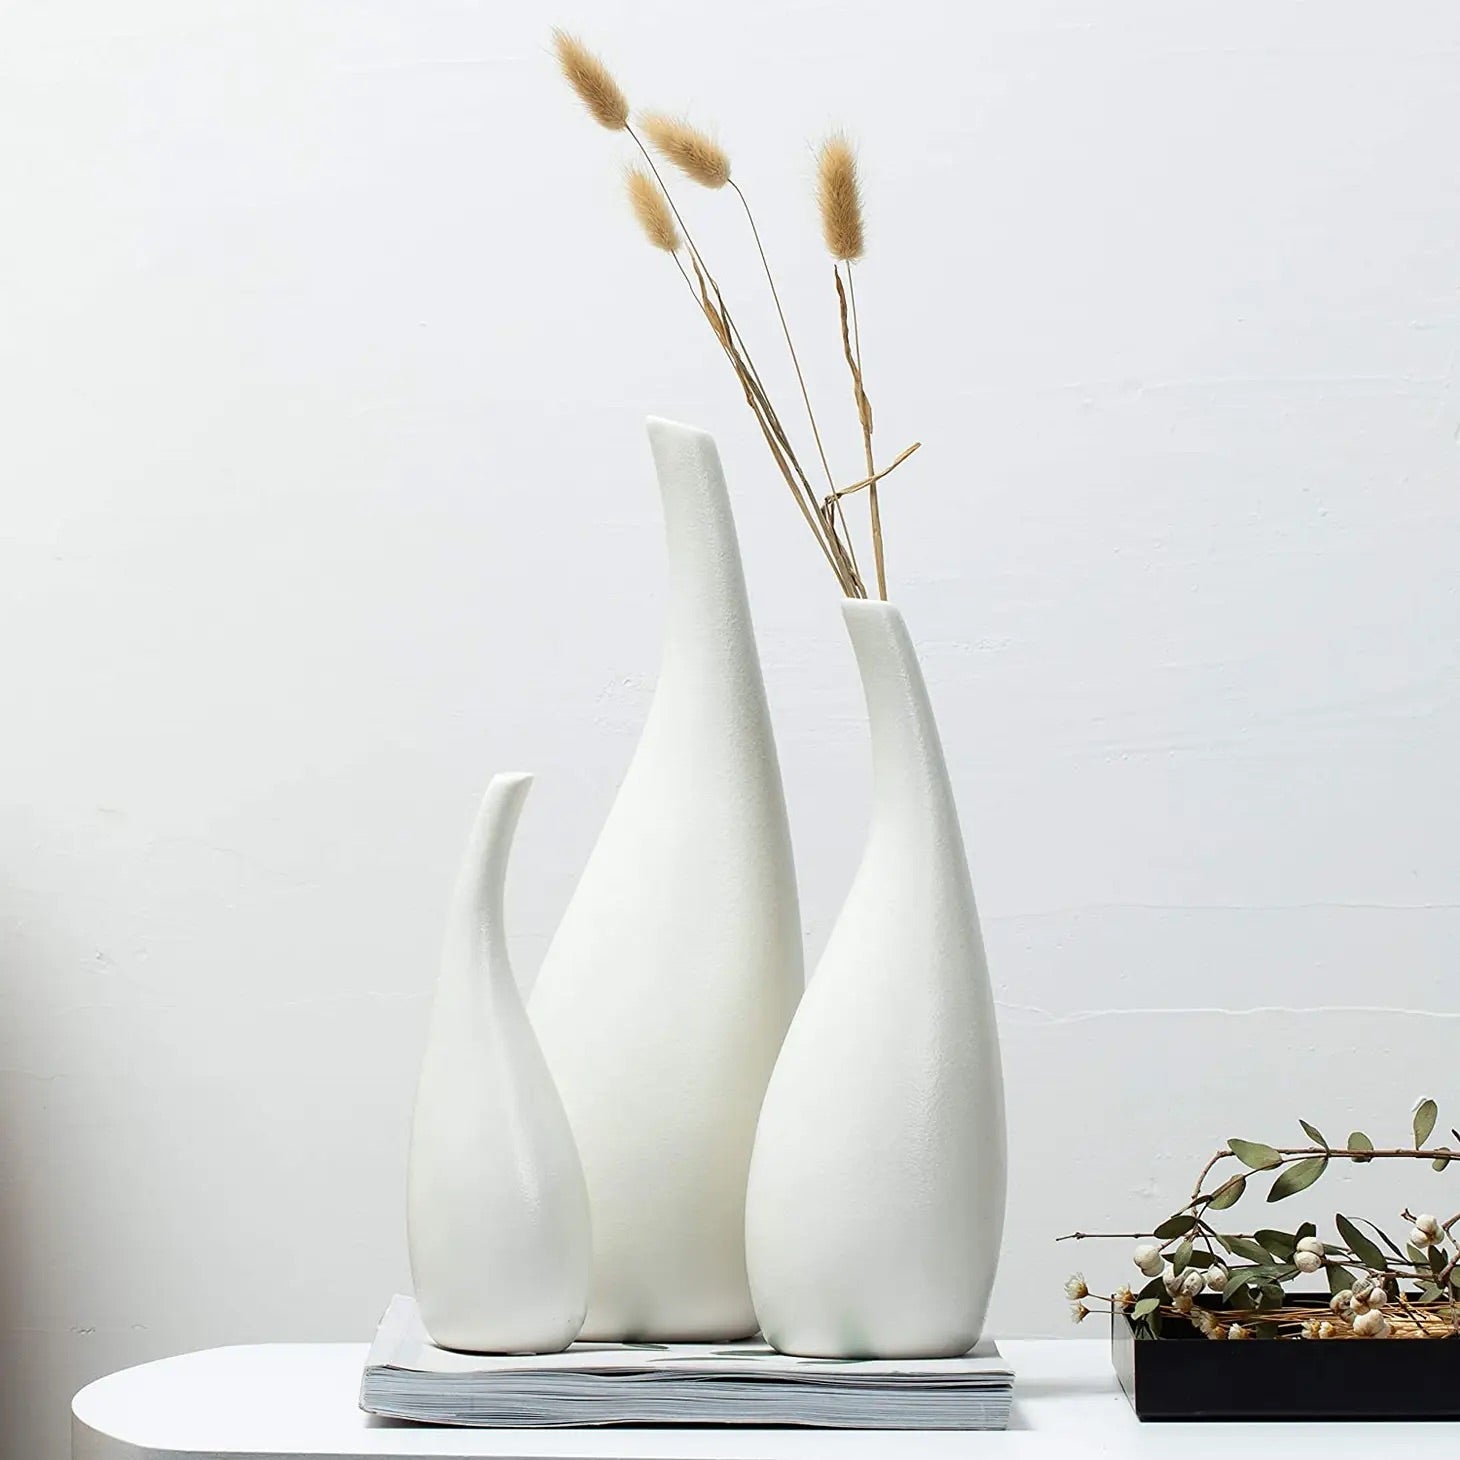 Set 3 Ceramic Vase, White Modern Vase and Fire Mantle modern minimalist centerpiece nordic trendy boho light curve large bottom and skinny top